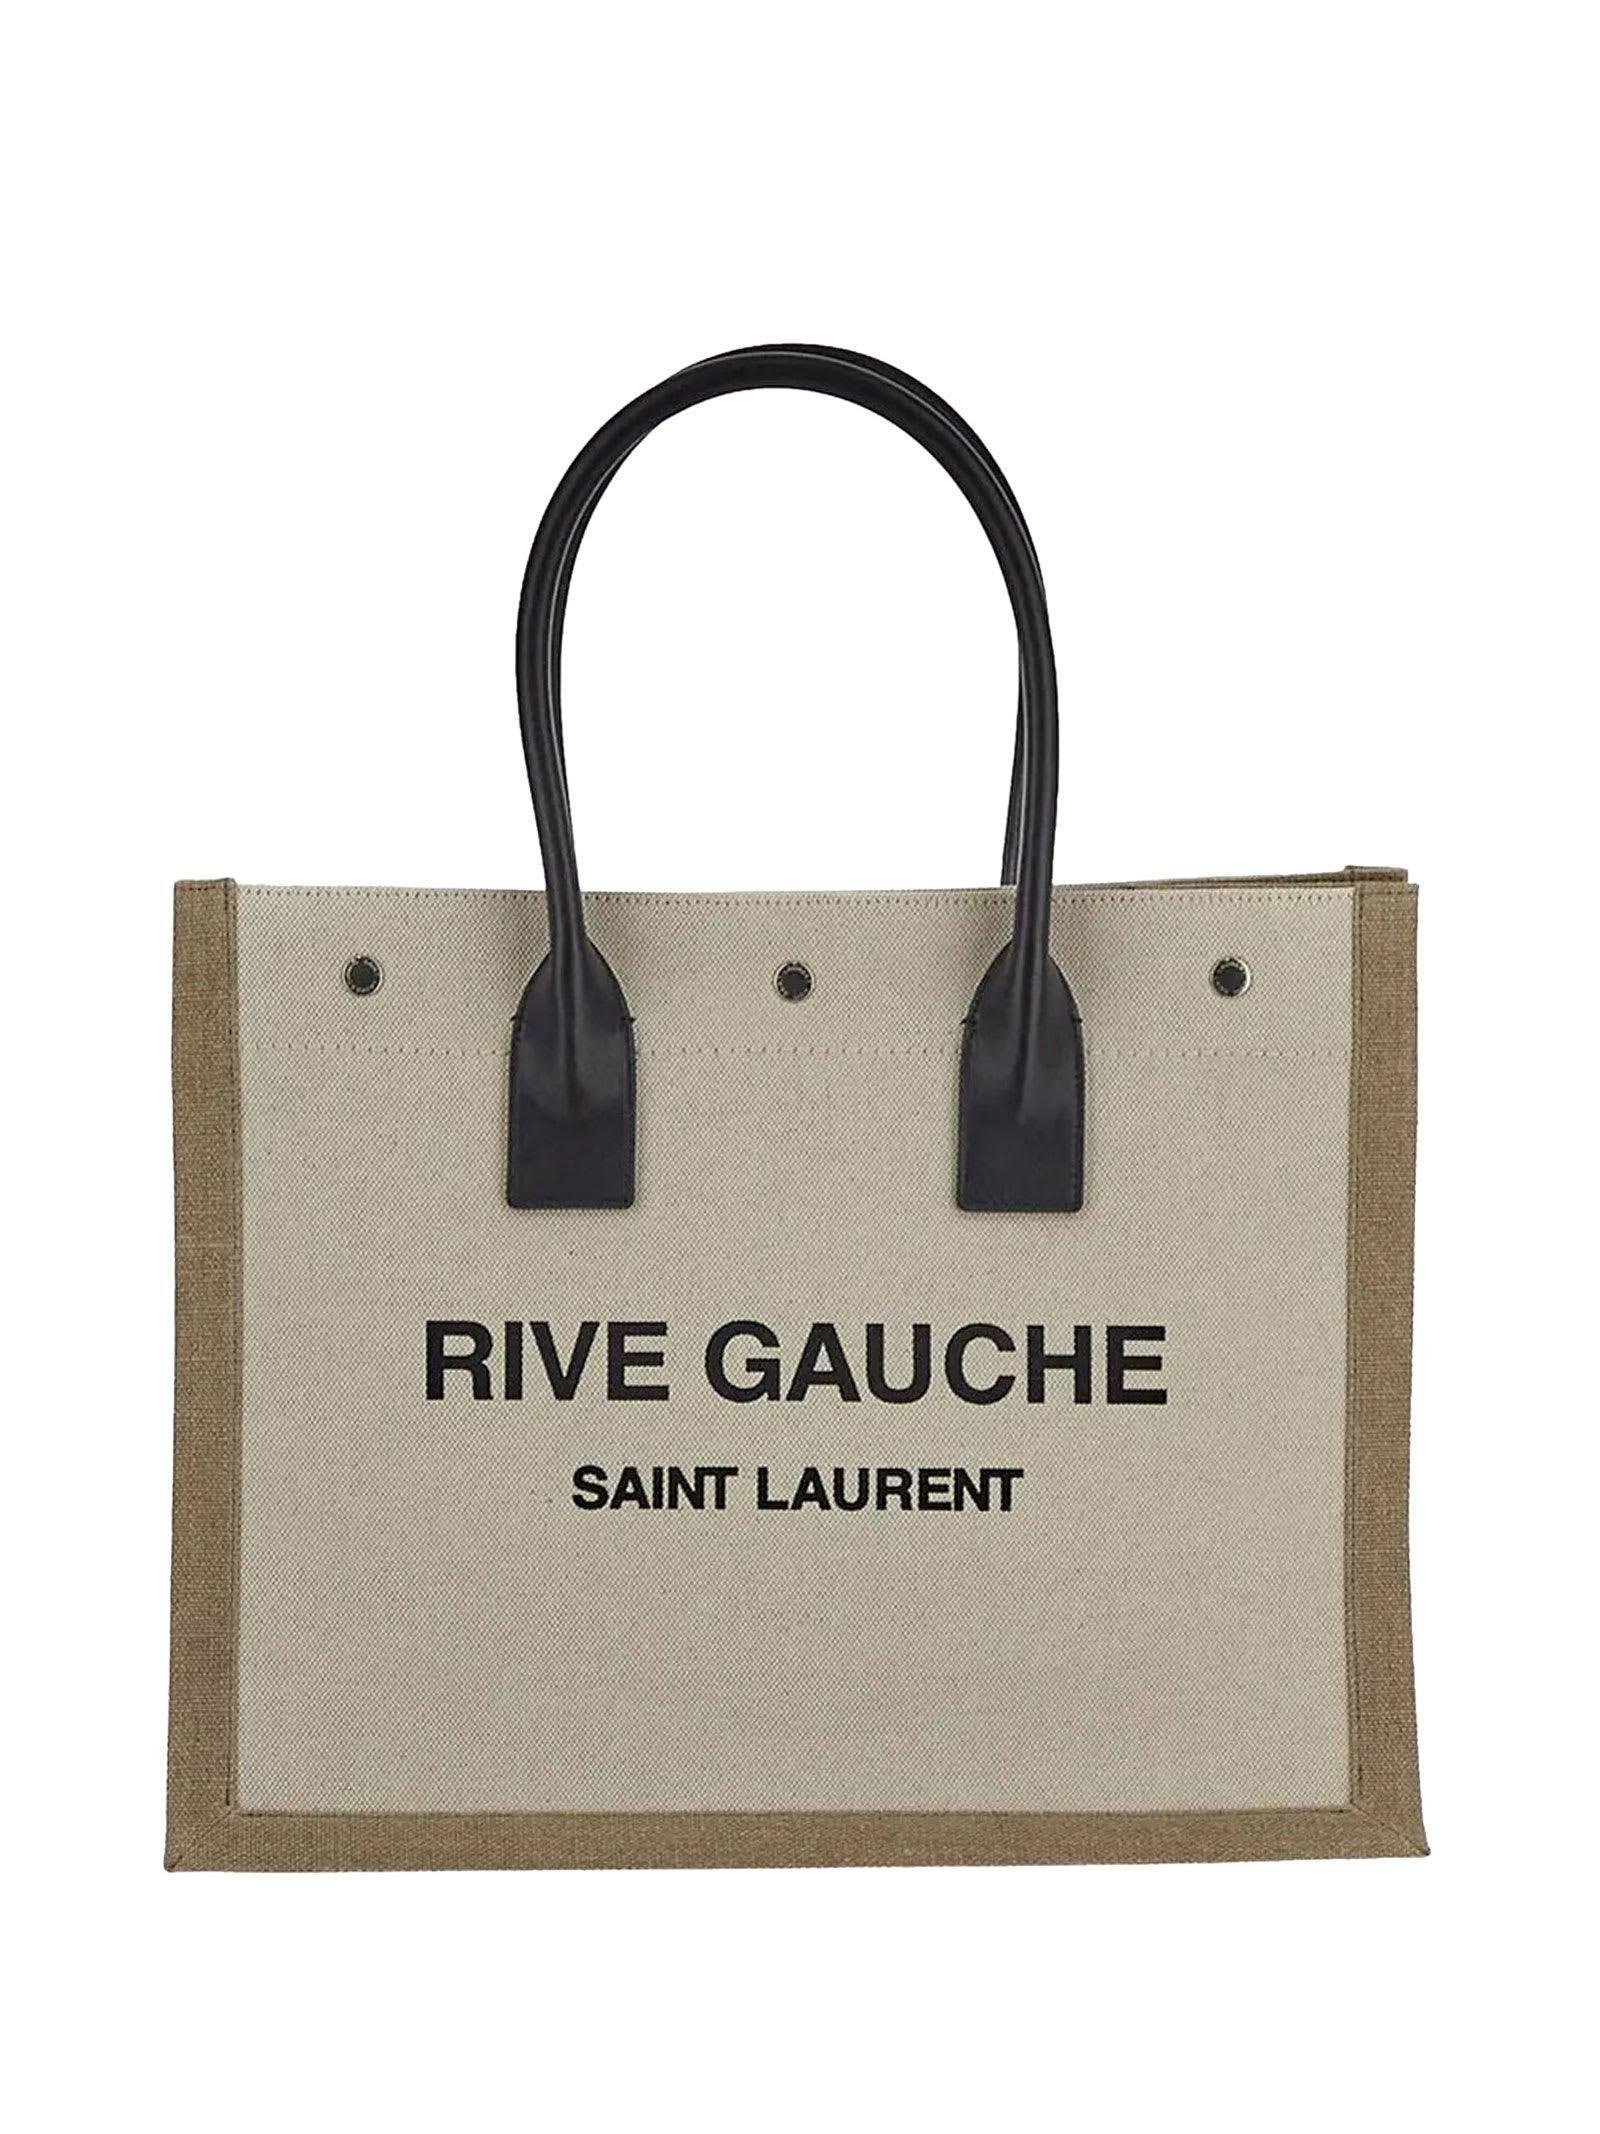 Saint Laurent Women's Rive Gauche Tote Bag - Natural - Totes